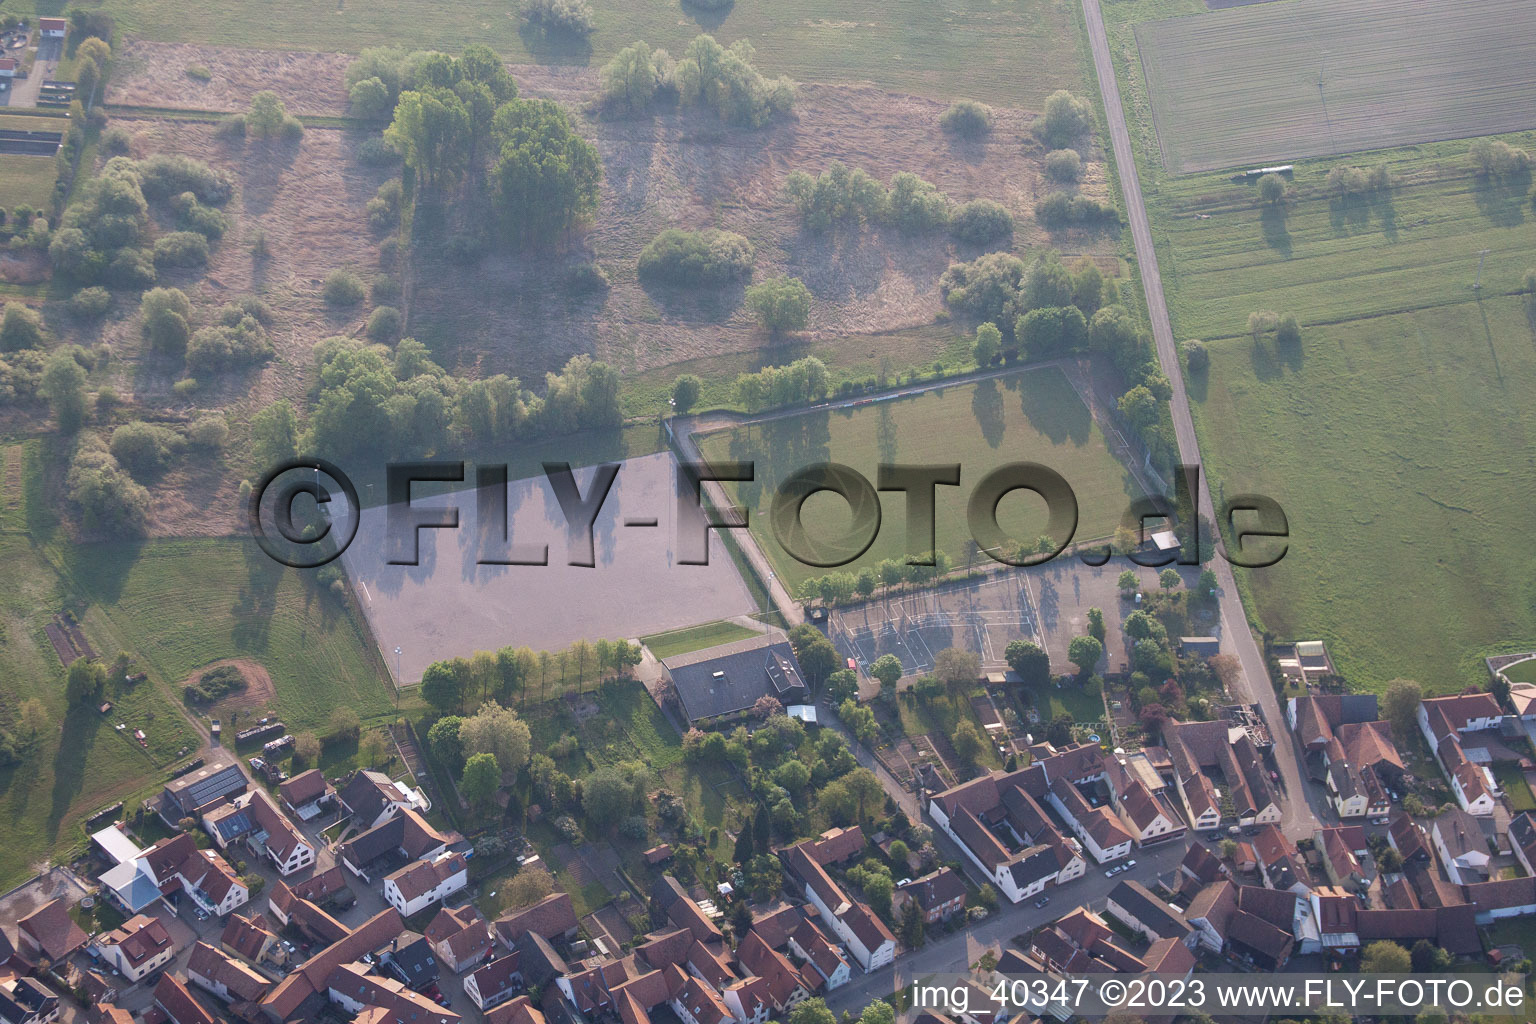 Drone recording of District Büchelberg in Wörth am Rhein in the state Rhineland-Palatinate, Germany